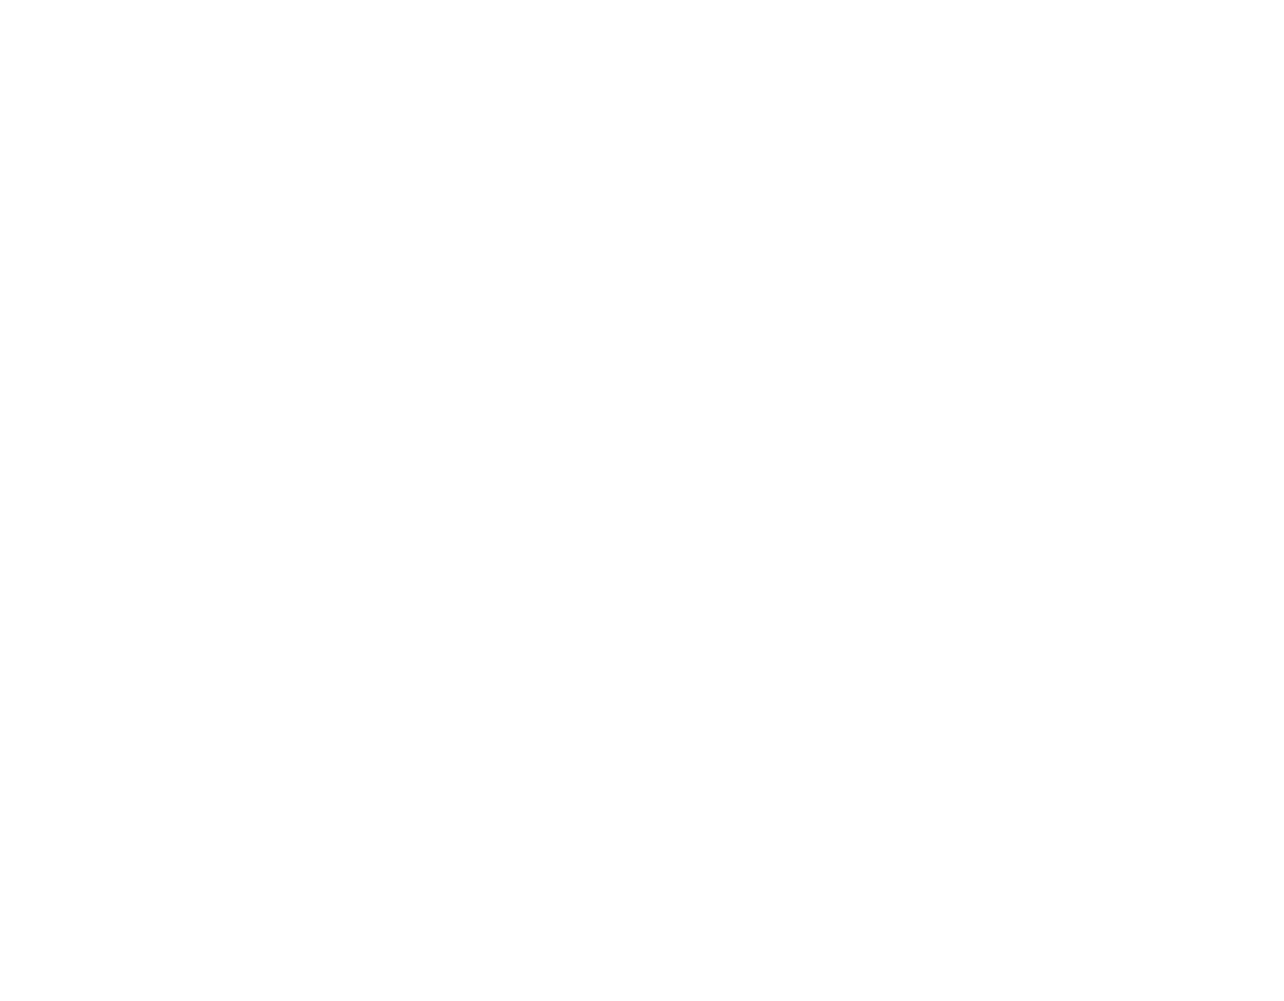 Rossen recycling logo icon white